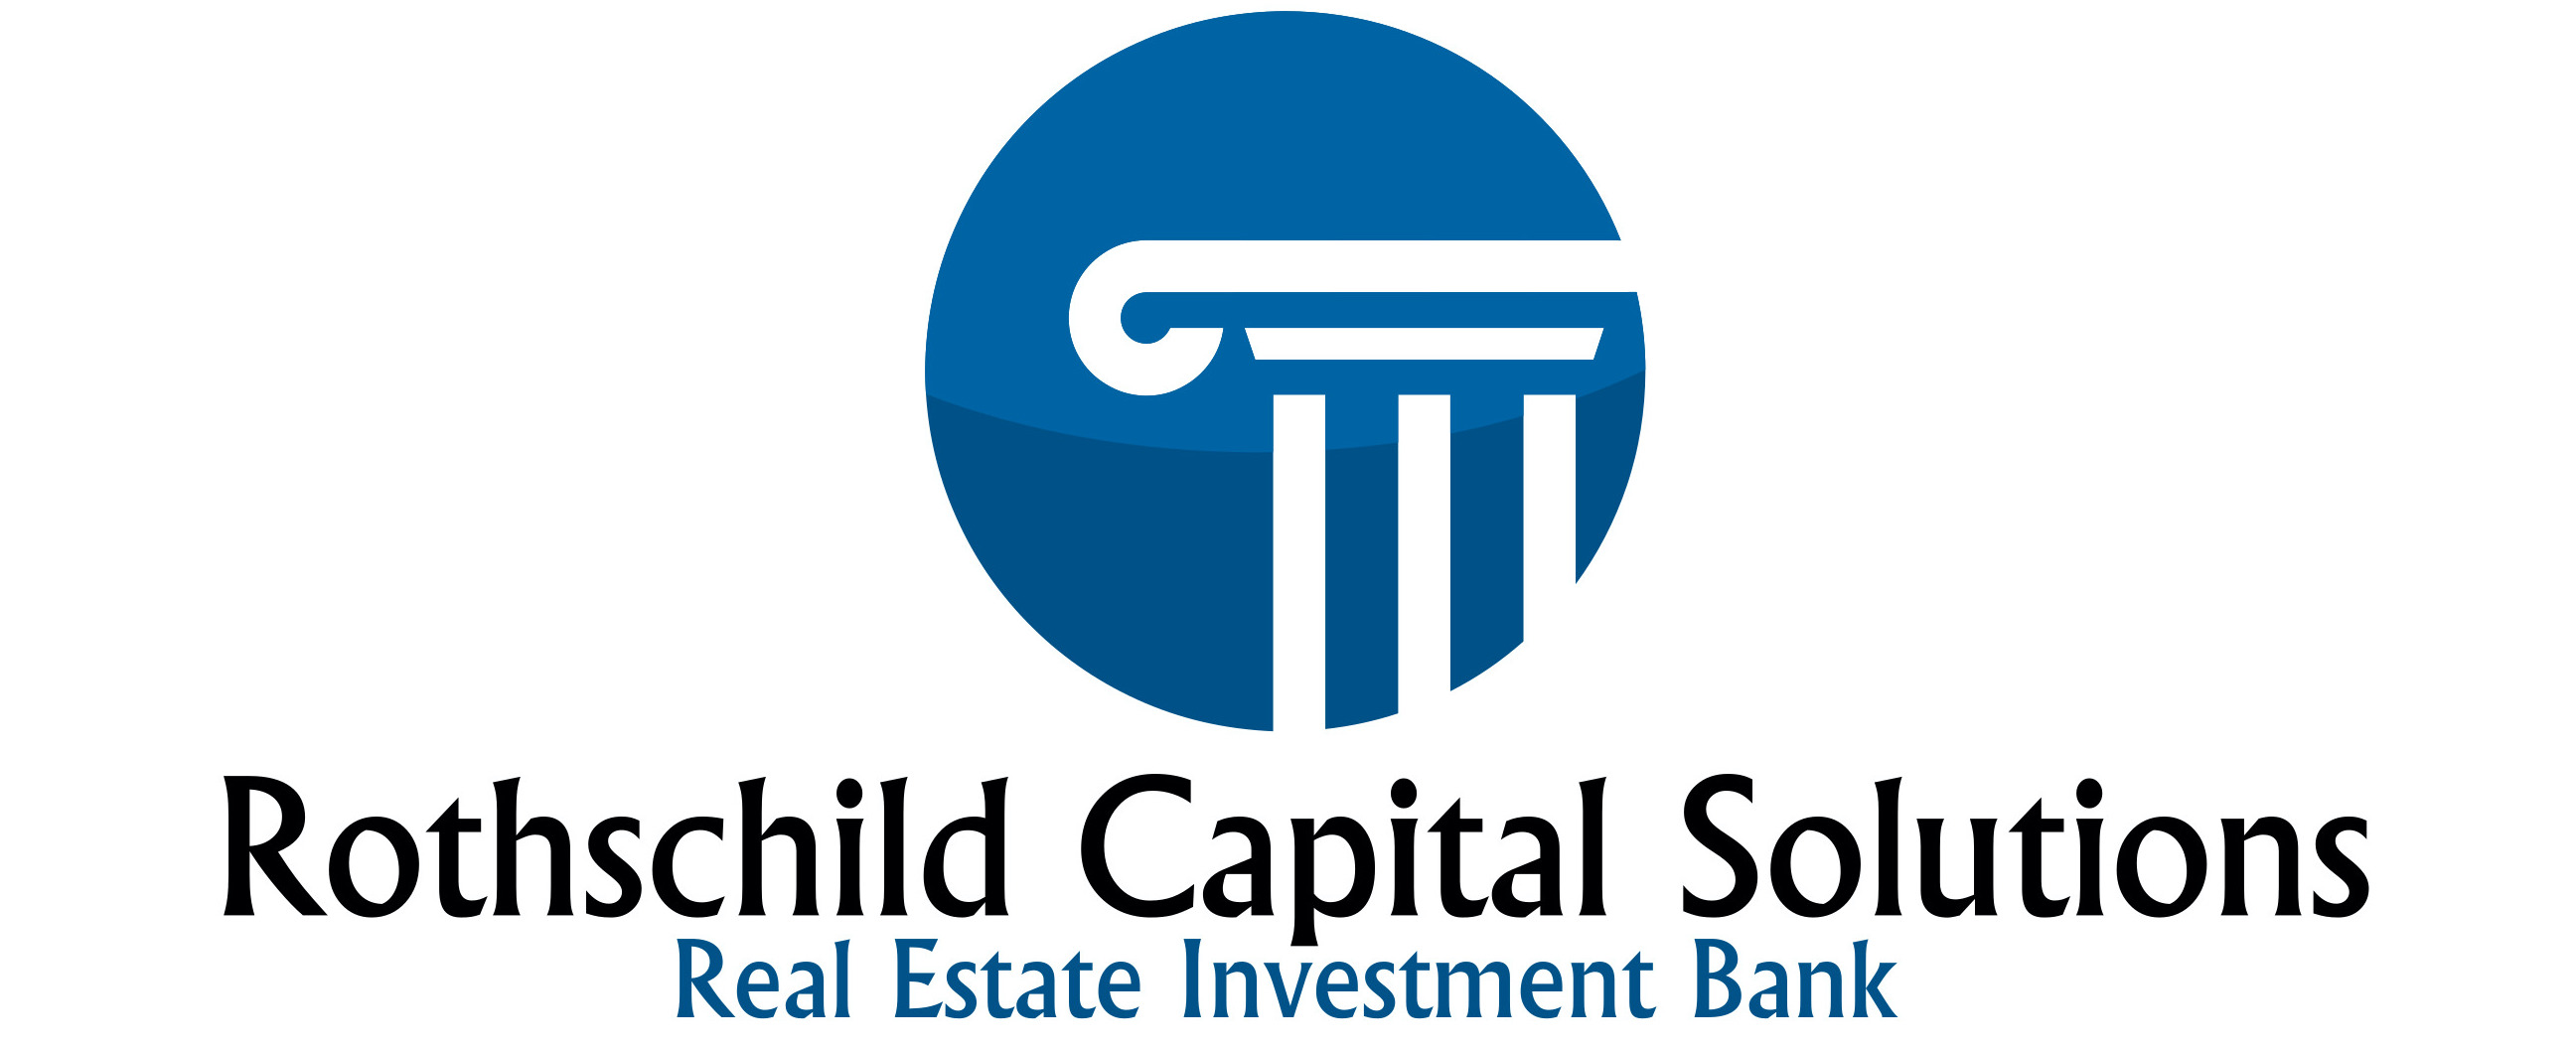 Rothschild Capital Solutions logo